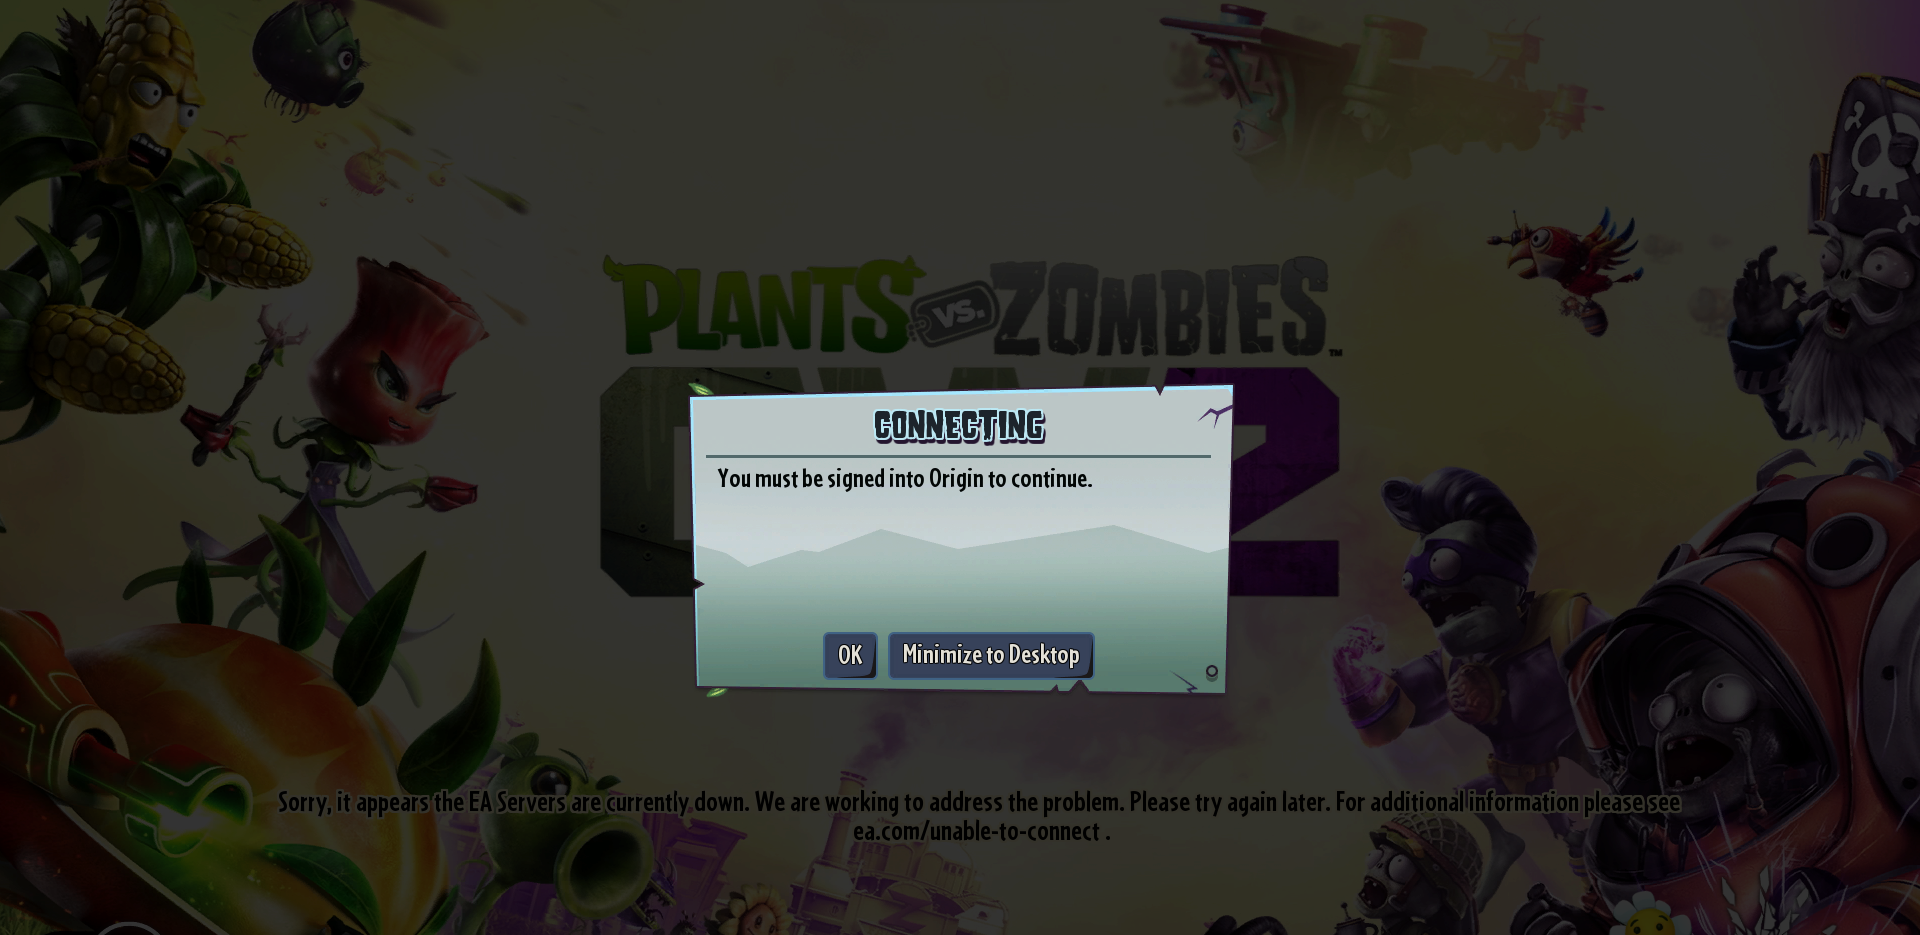 Plants vs. Zombies Garden Warfare - PC EA app